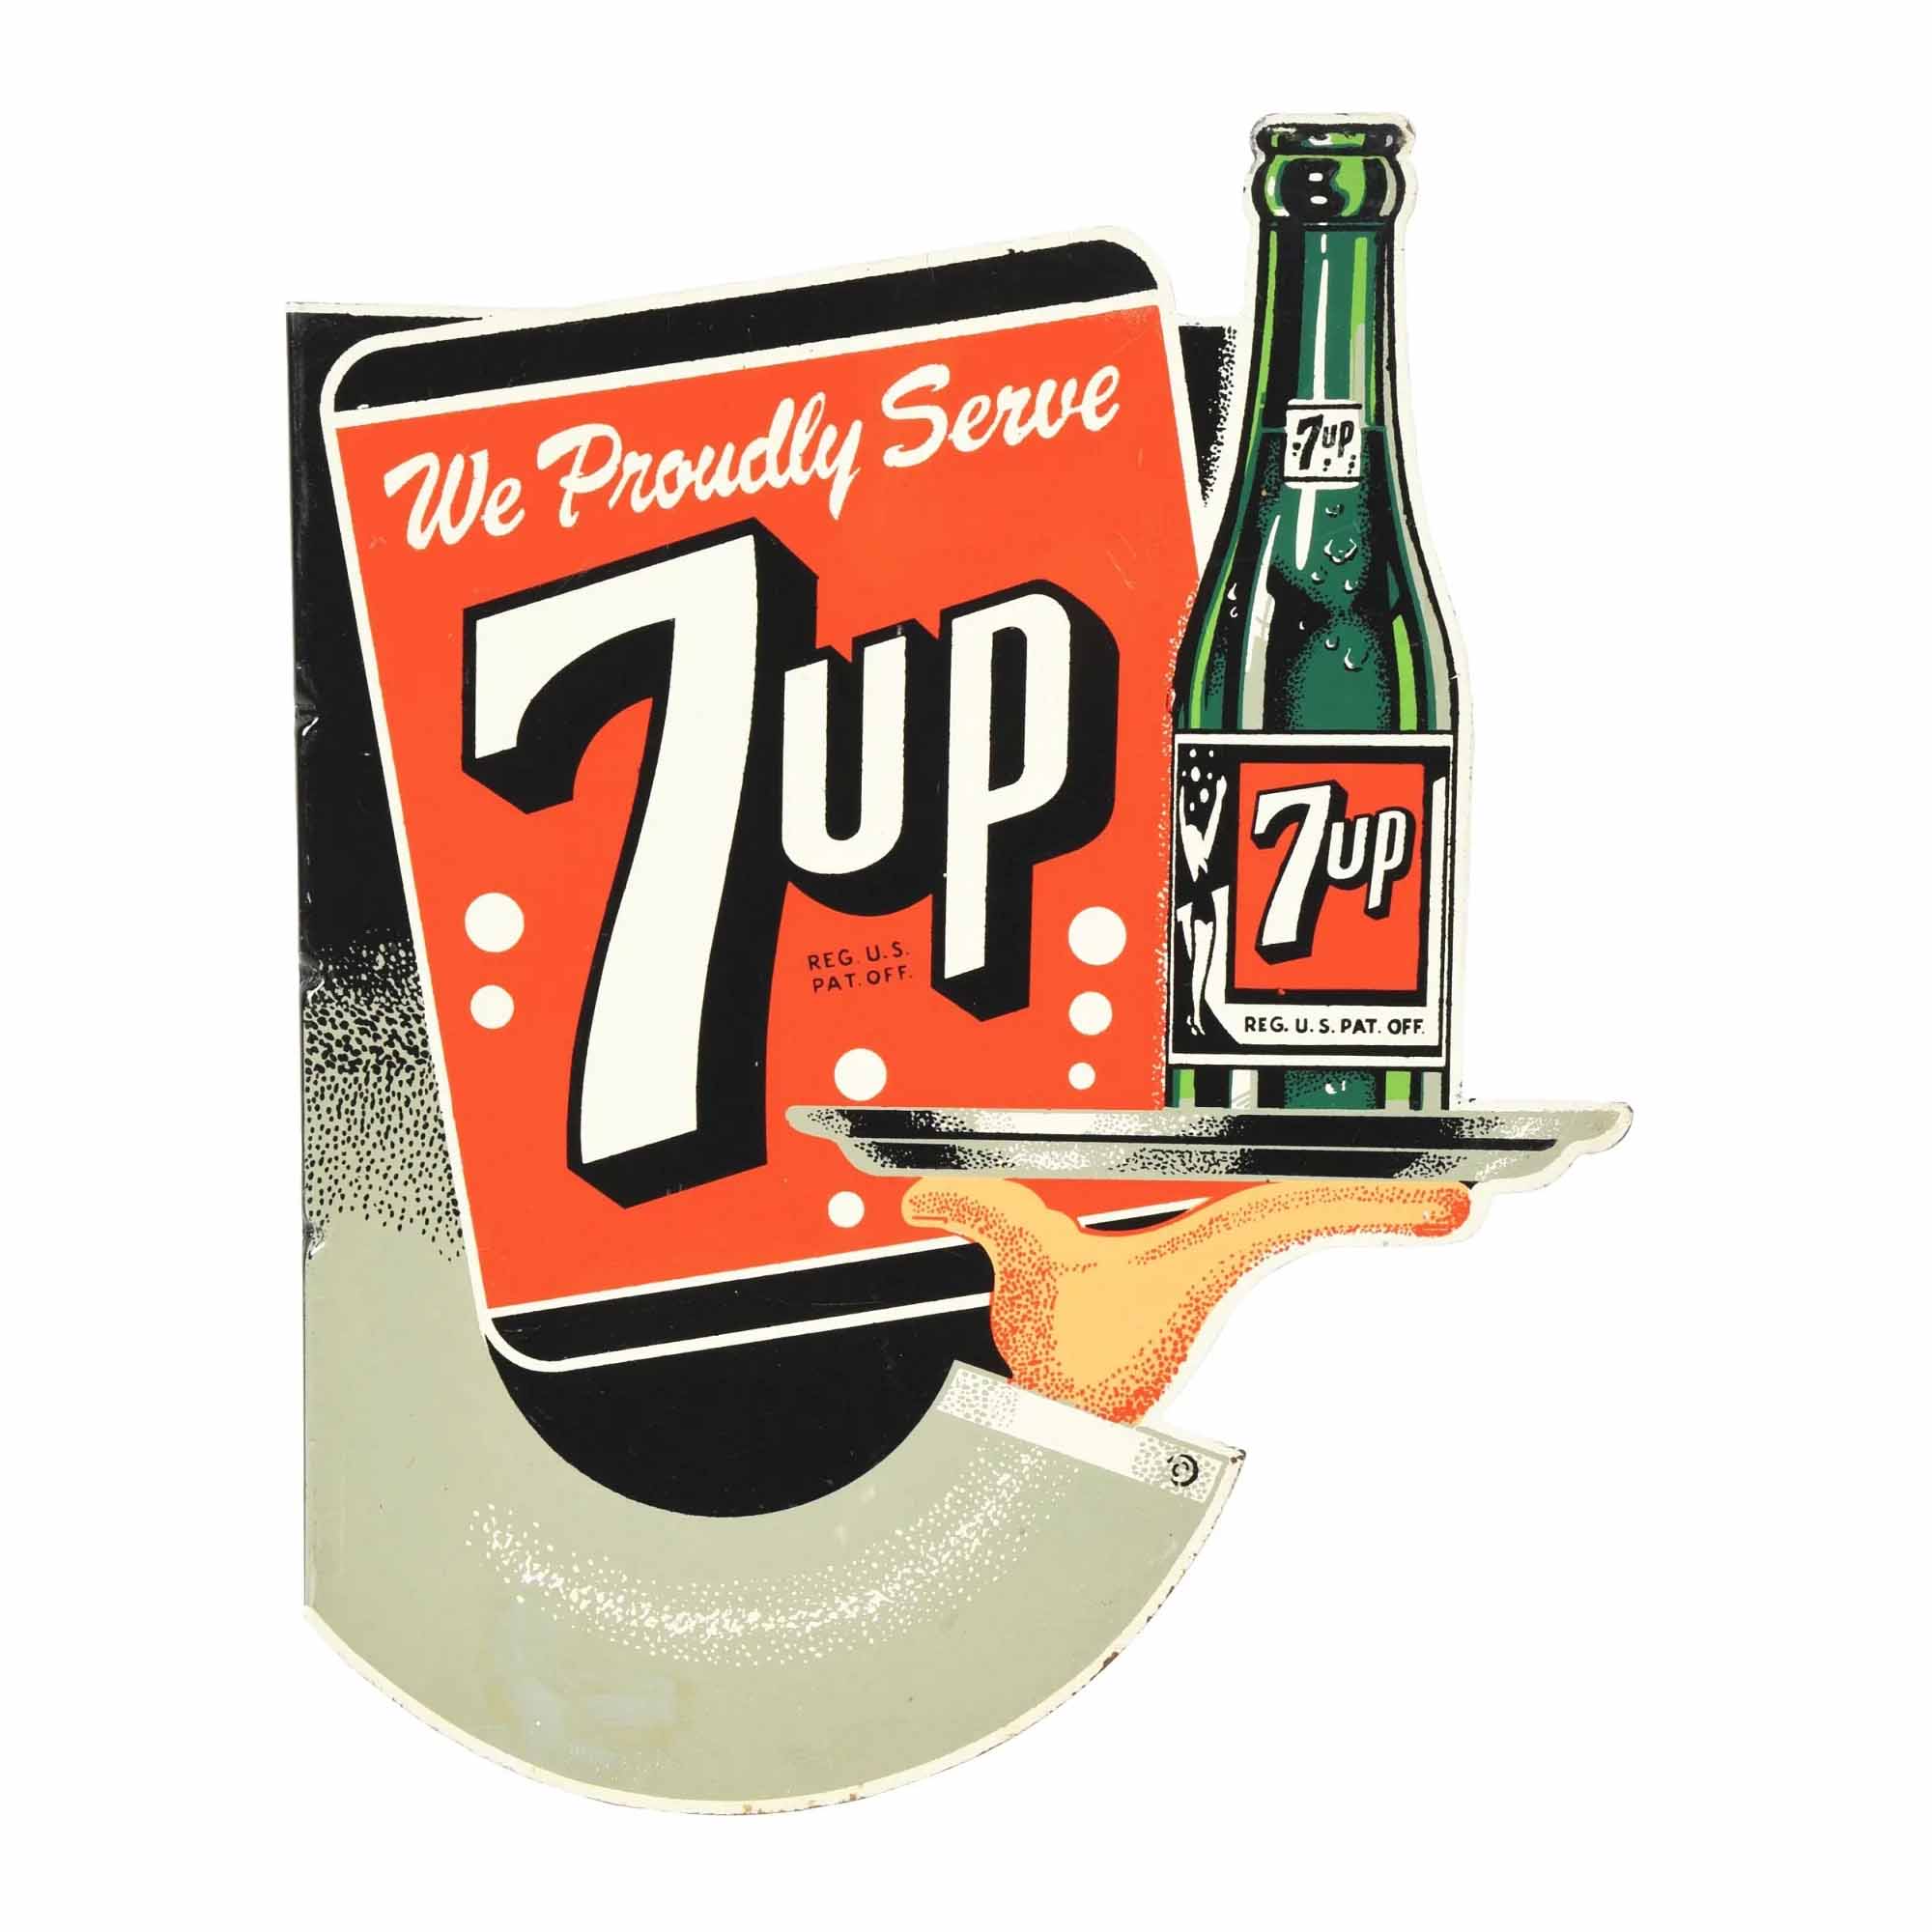 Morphy returns to Las Vegas June 7-8 with Soda Pop &#038; Antique Advertising